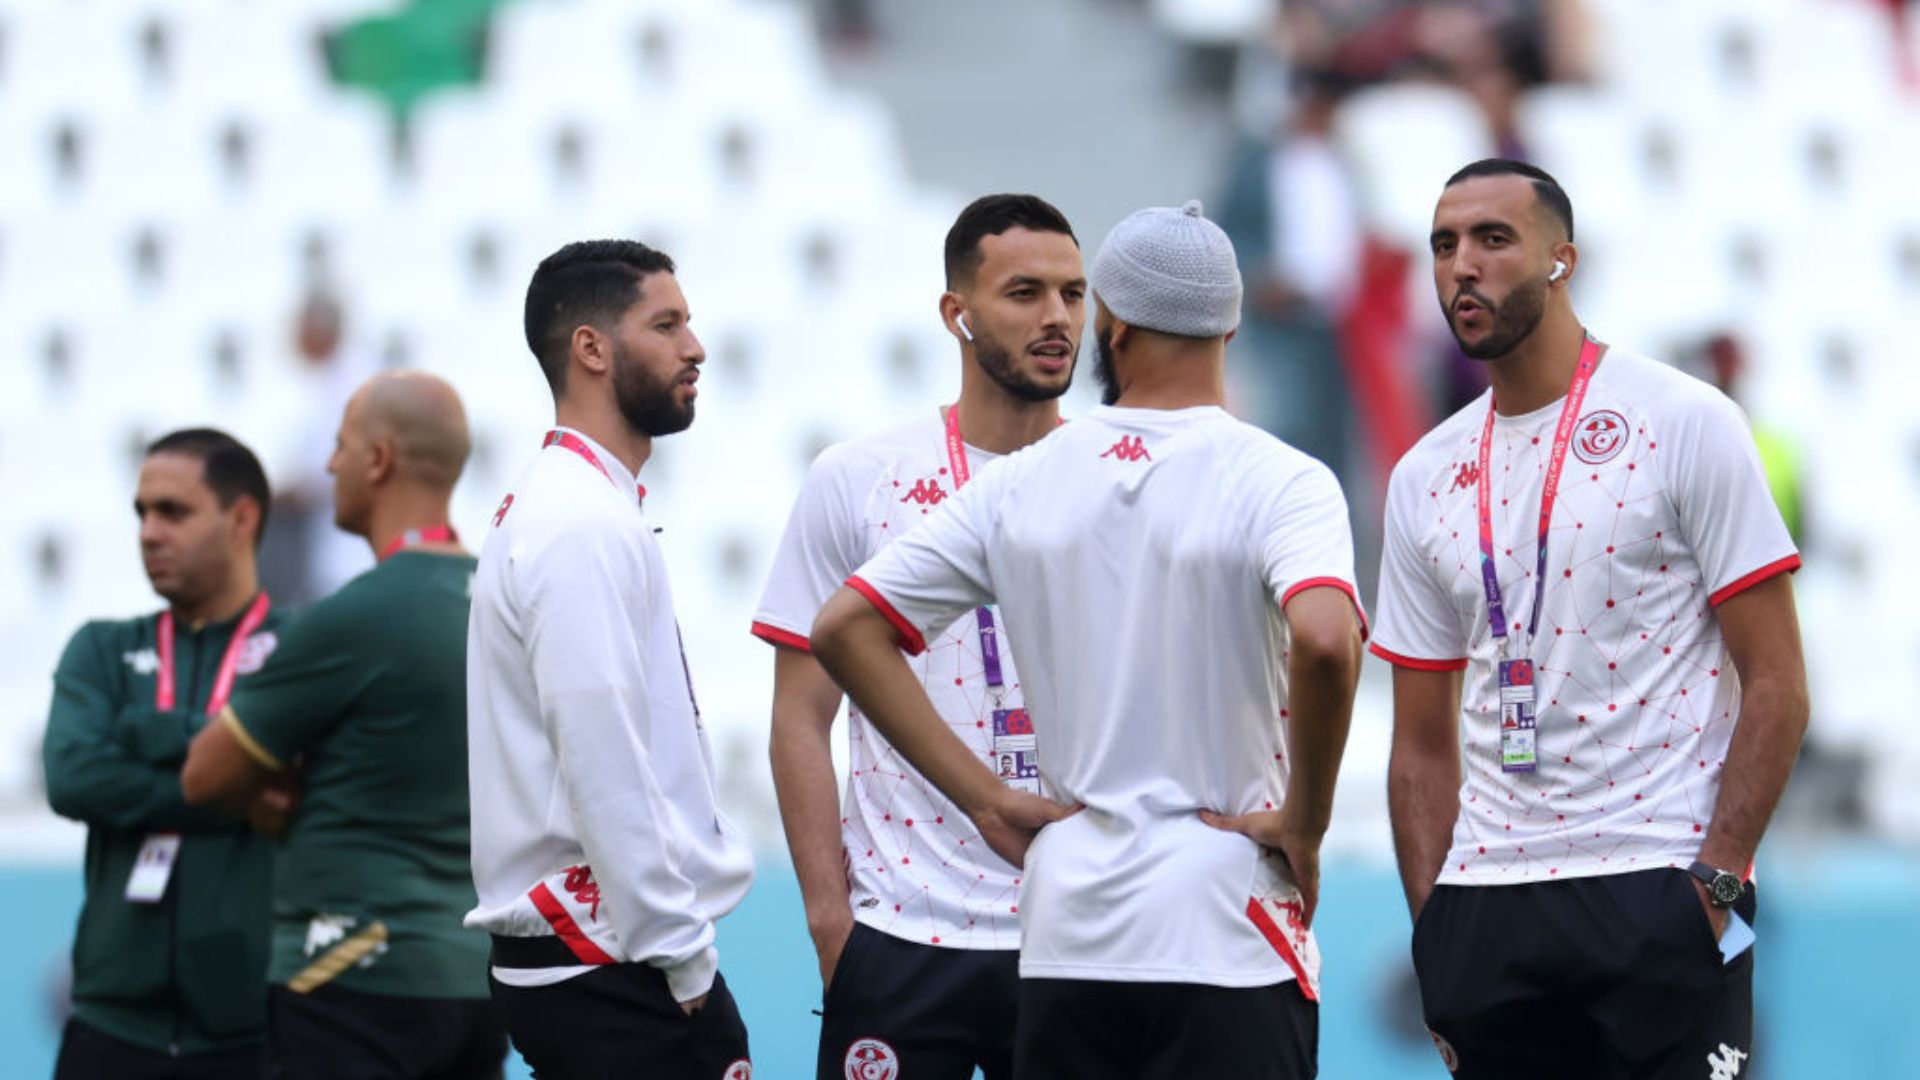 Tunísia está confirmada para a estreia na Copa do Mundo